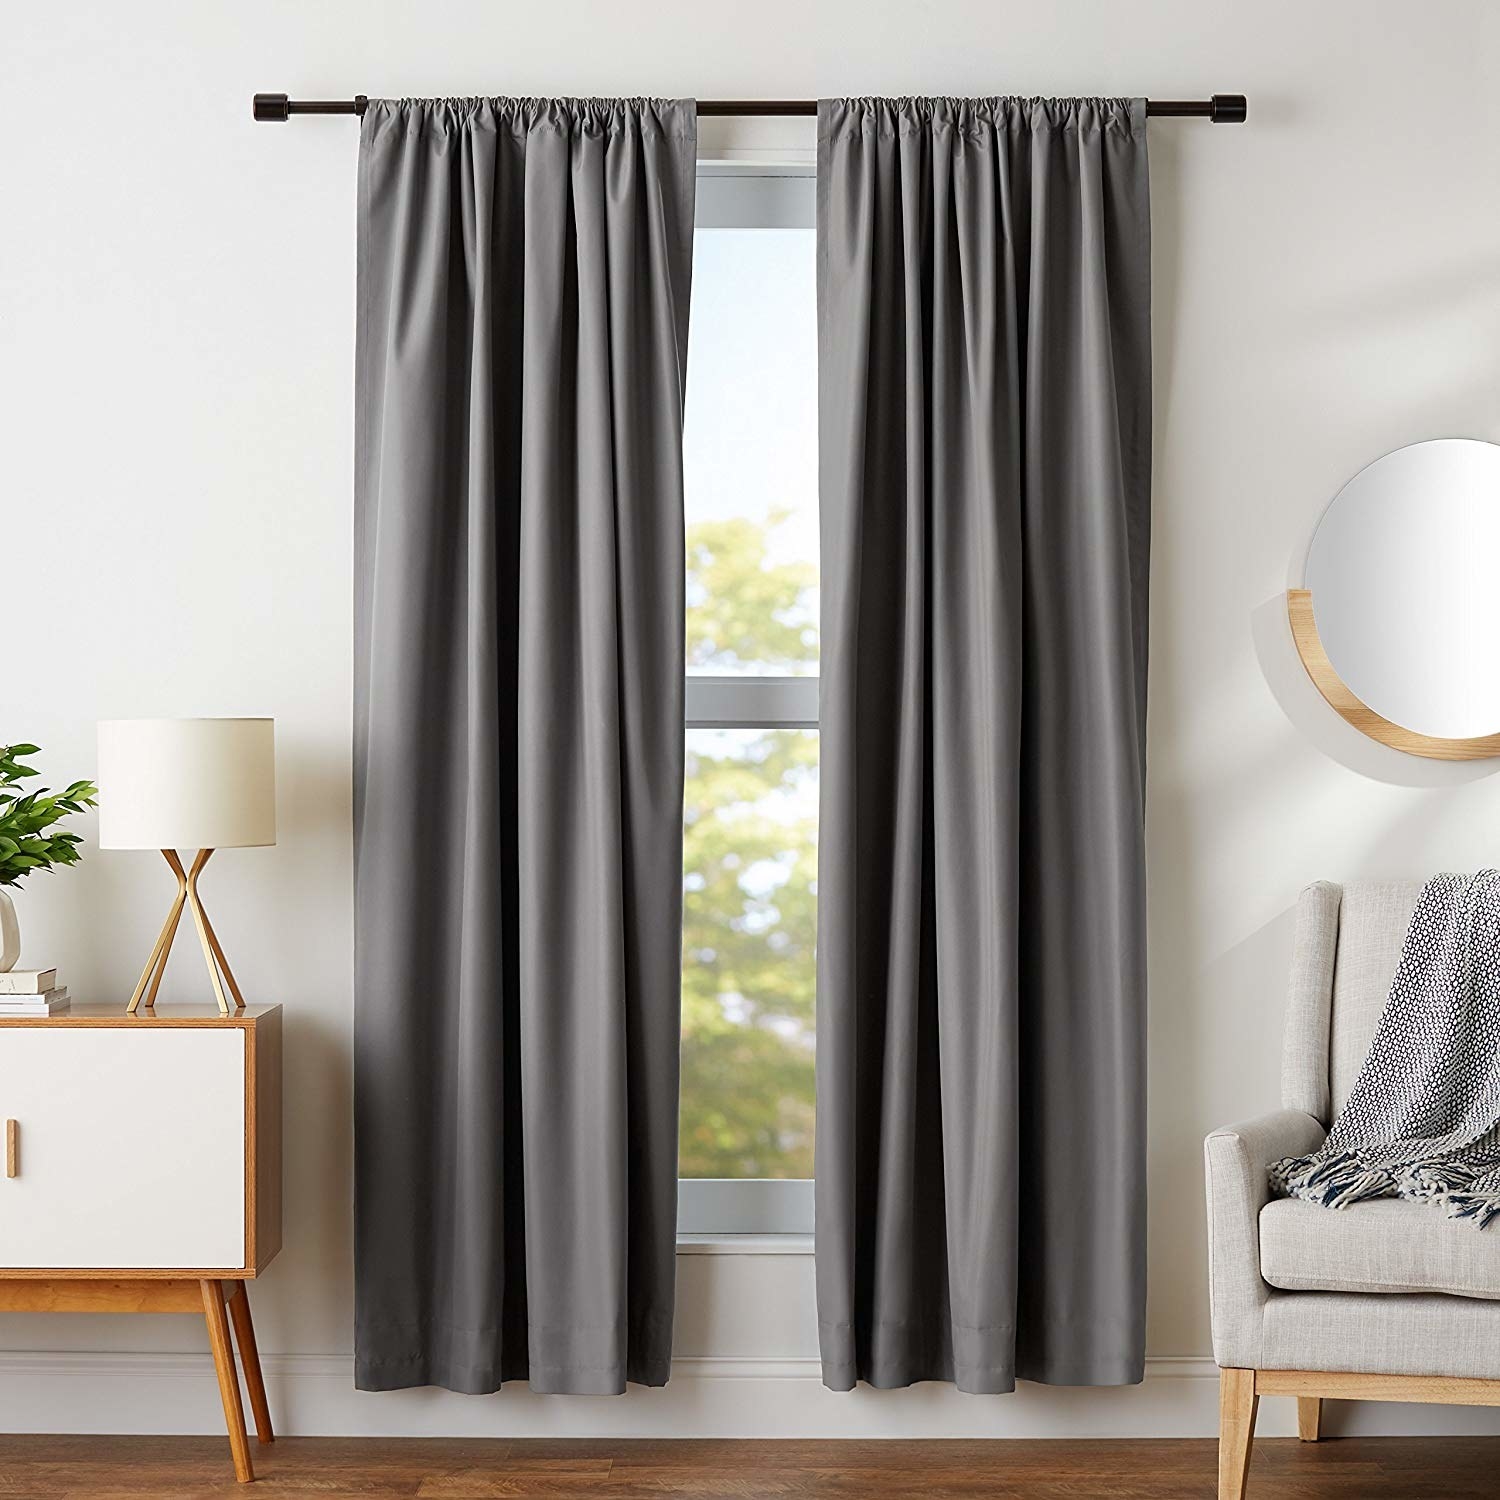 Grey curtains on a window